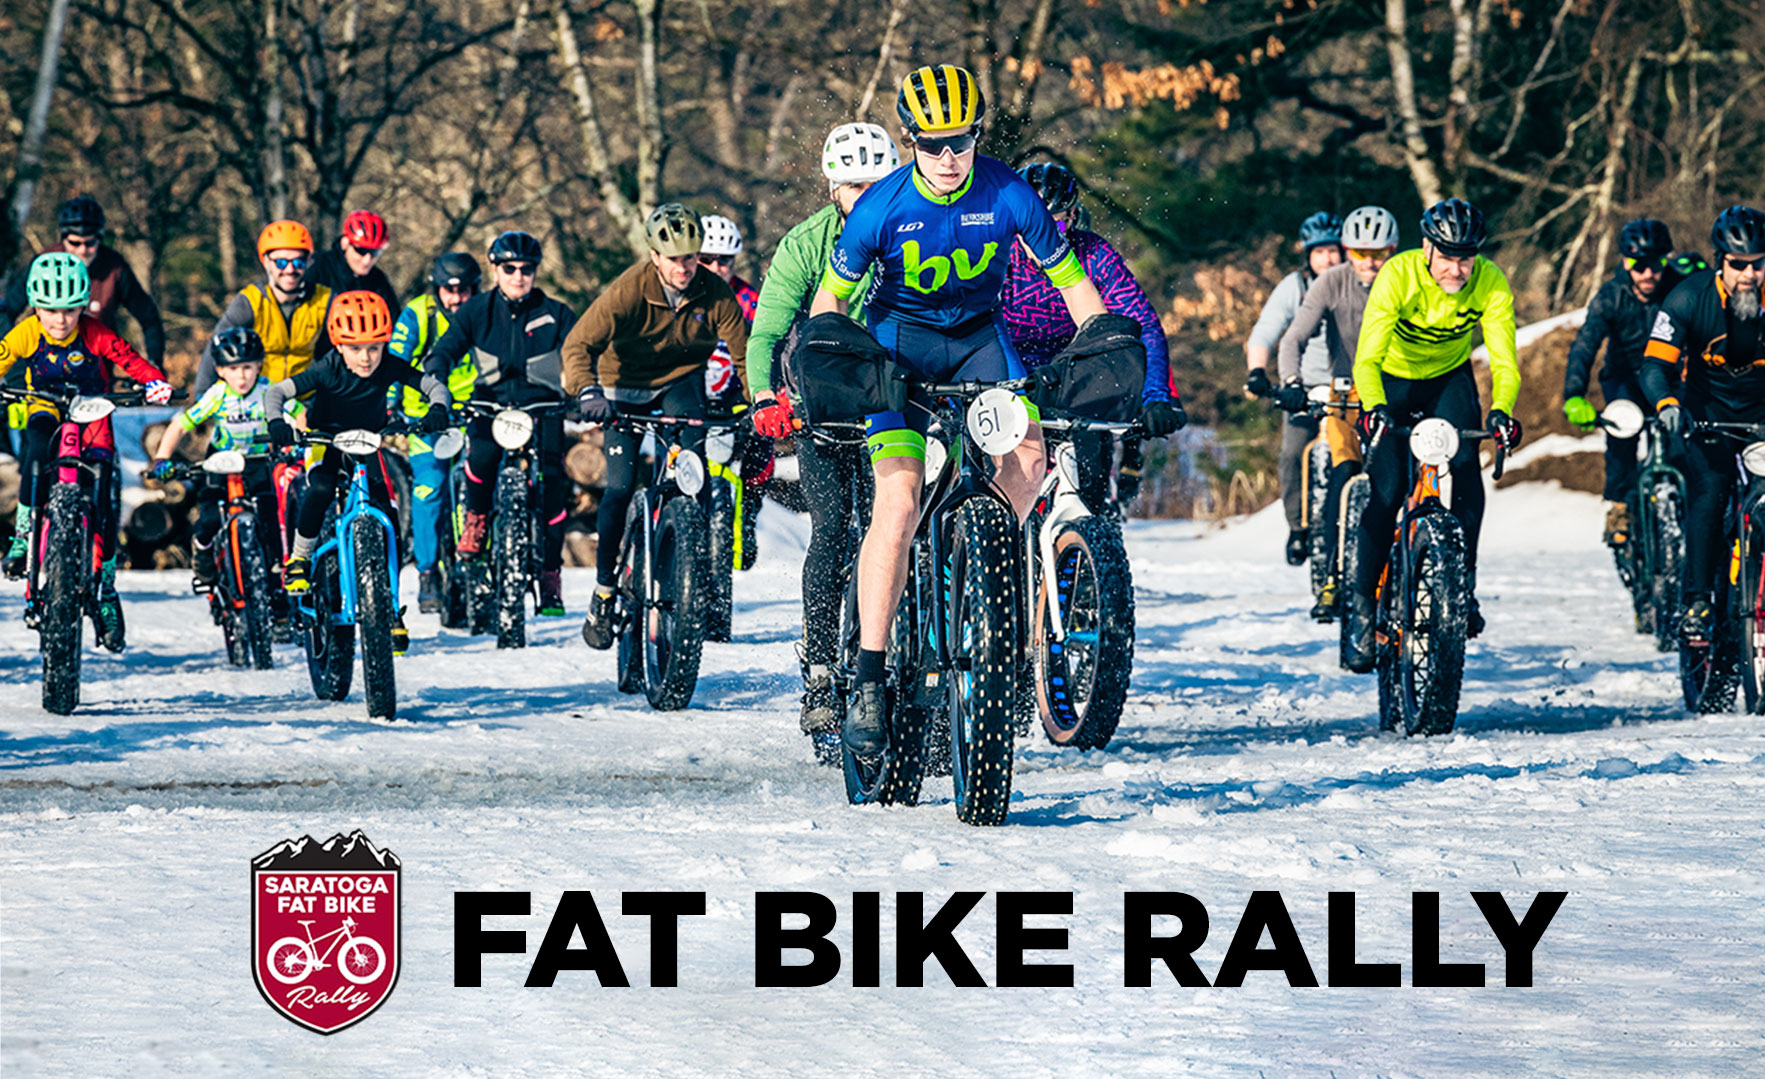 Fat Bike Riders biking in the snow